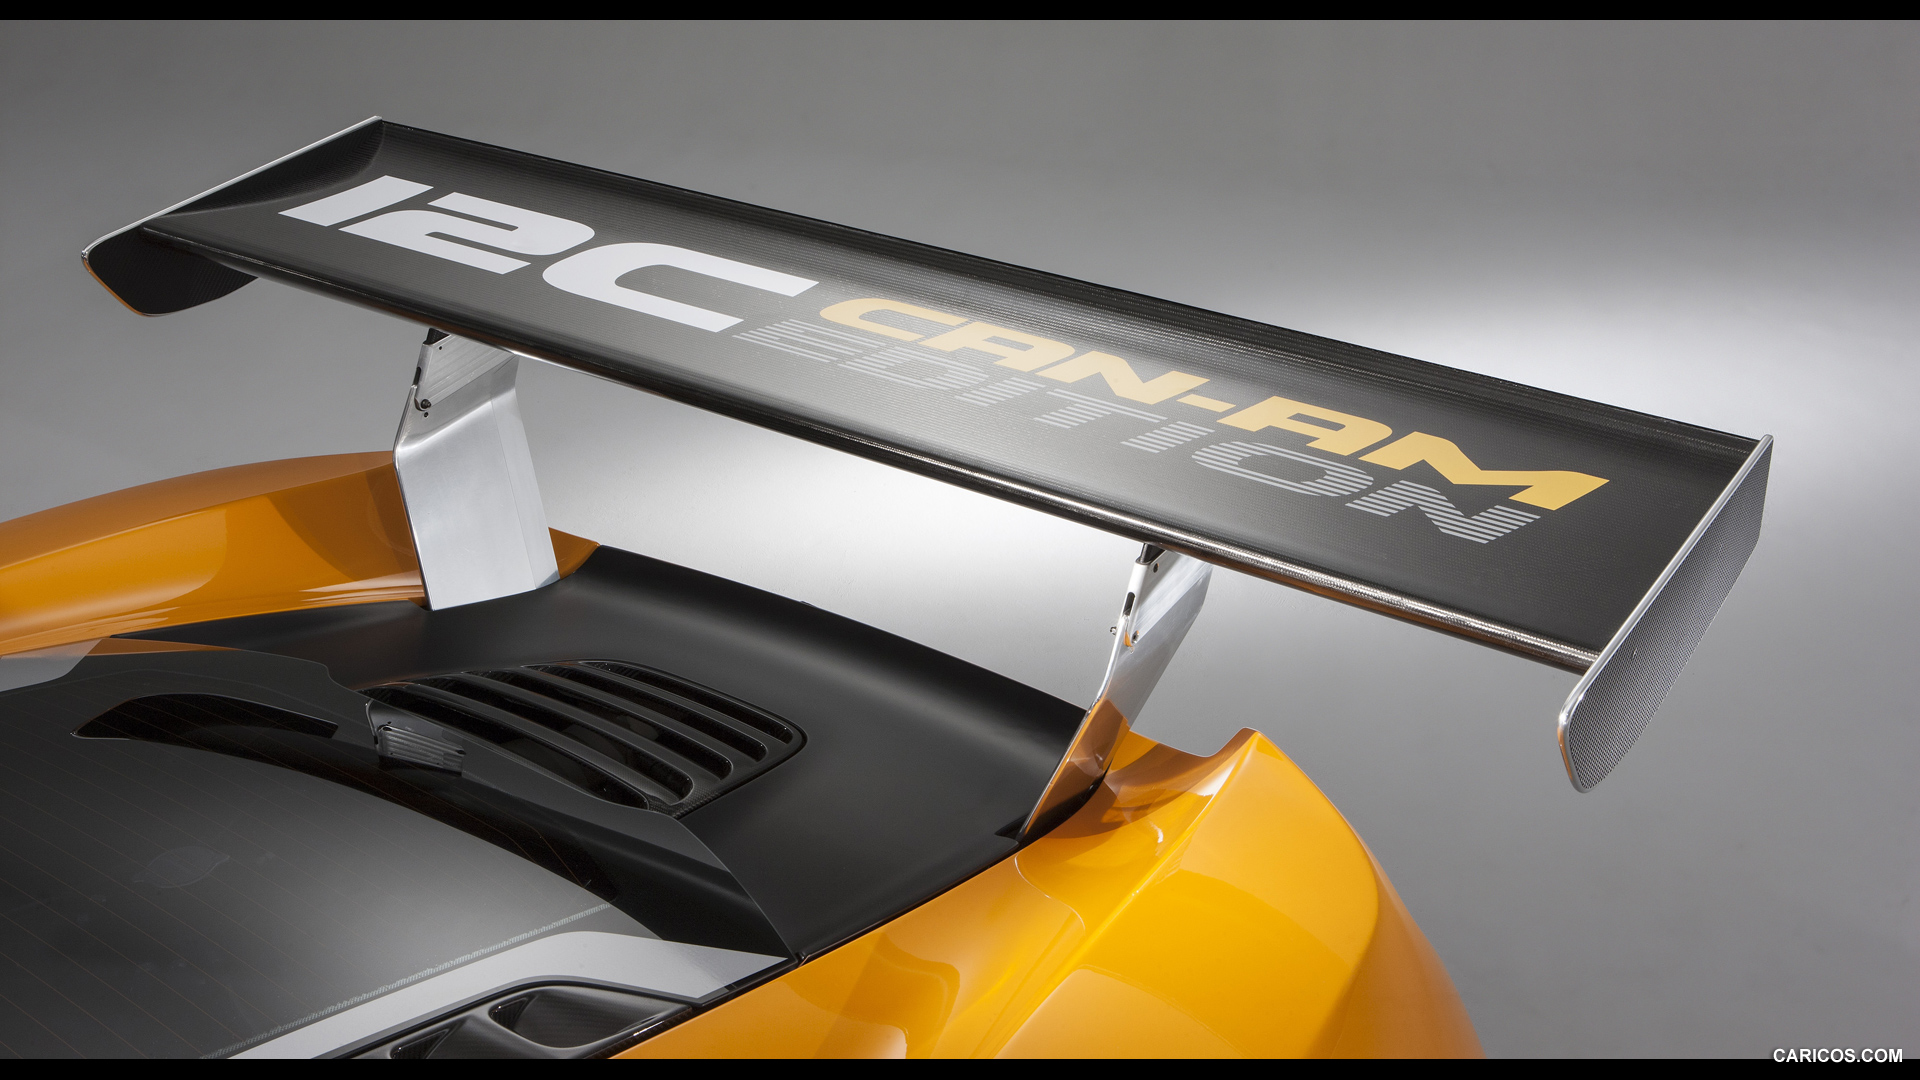 2012 McLaren 12C Can-Am Edition Racing Concept  - Spoiler, #13 of 17